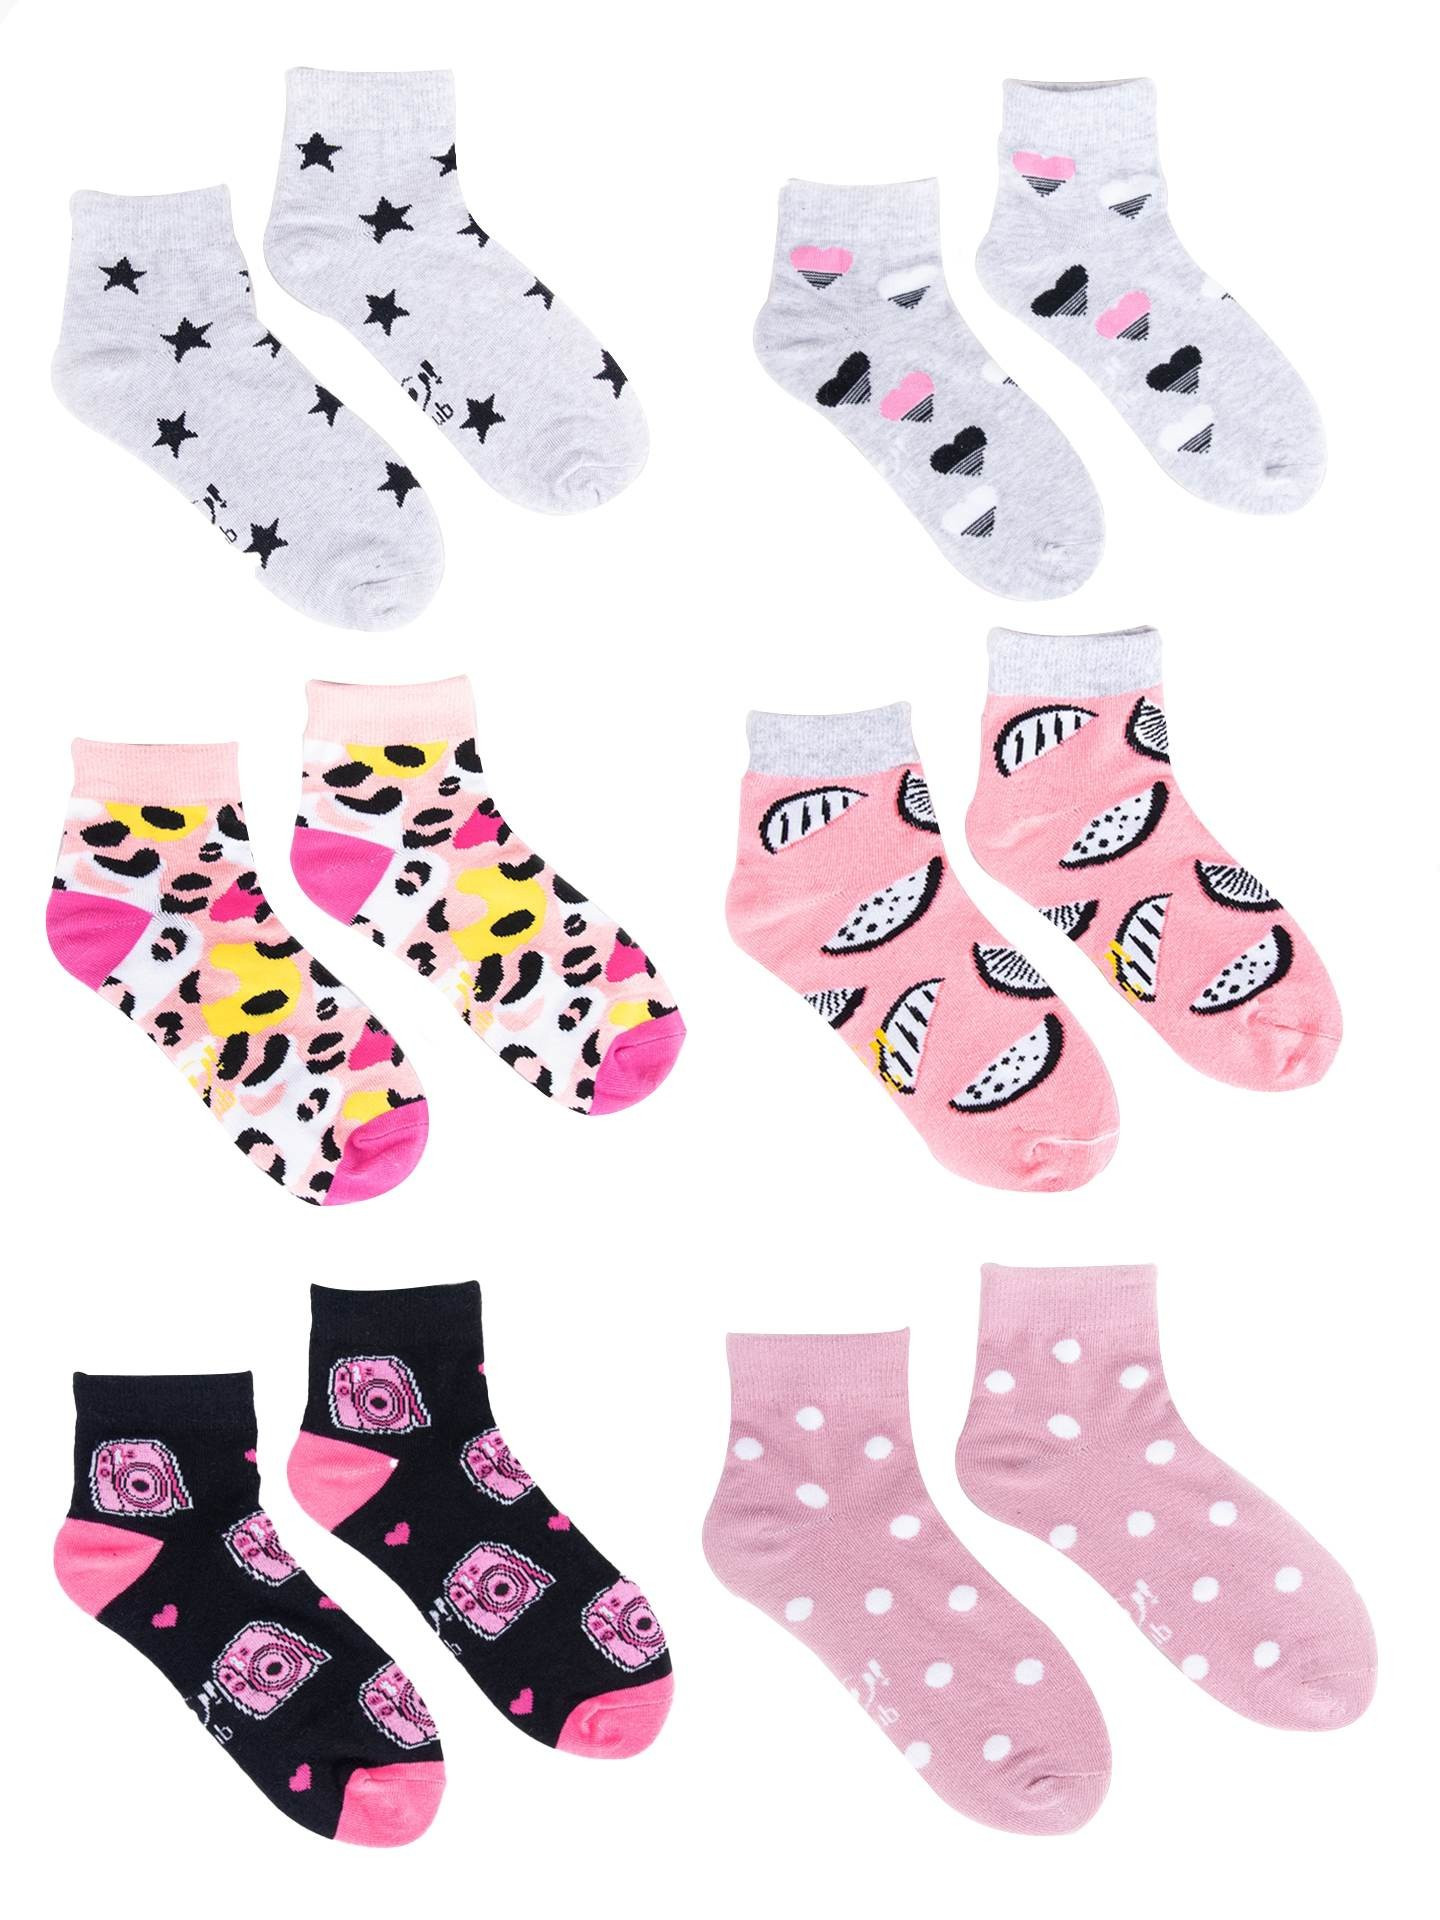 Yoclub Dívčí bavlněné ponožky Vzory Barvy 6-pack SKA-0023G-AA00-002 Vícebarevné 39-41